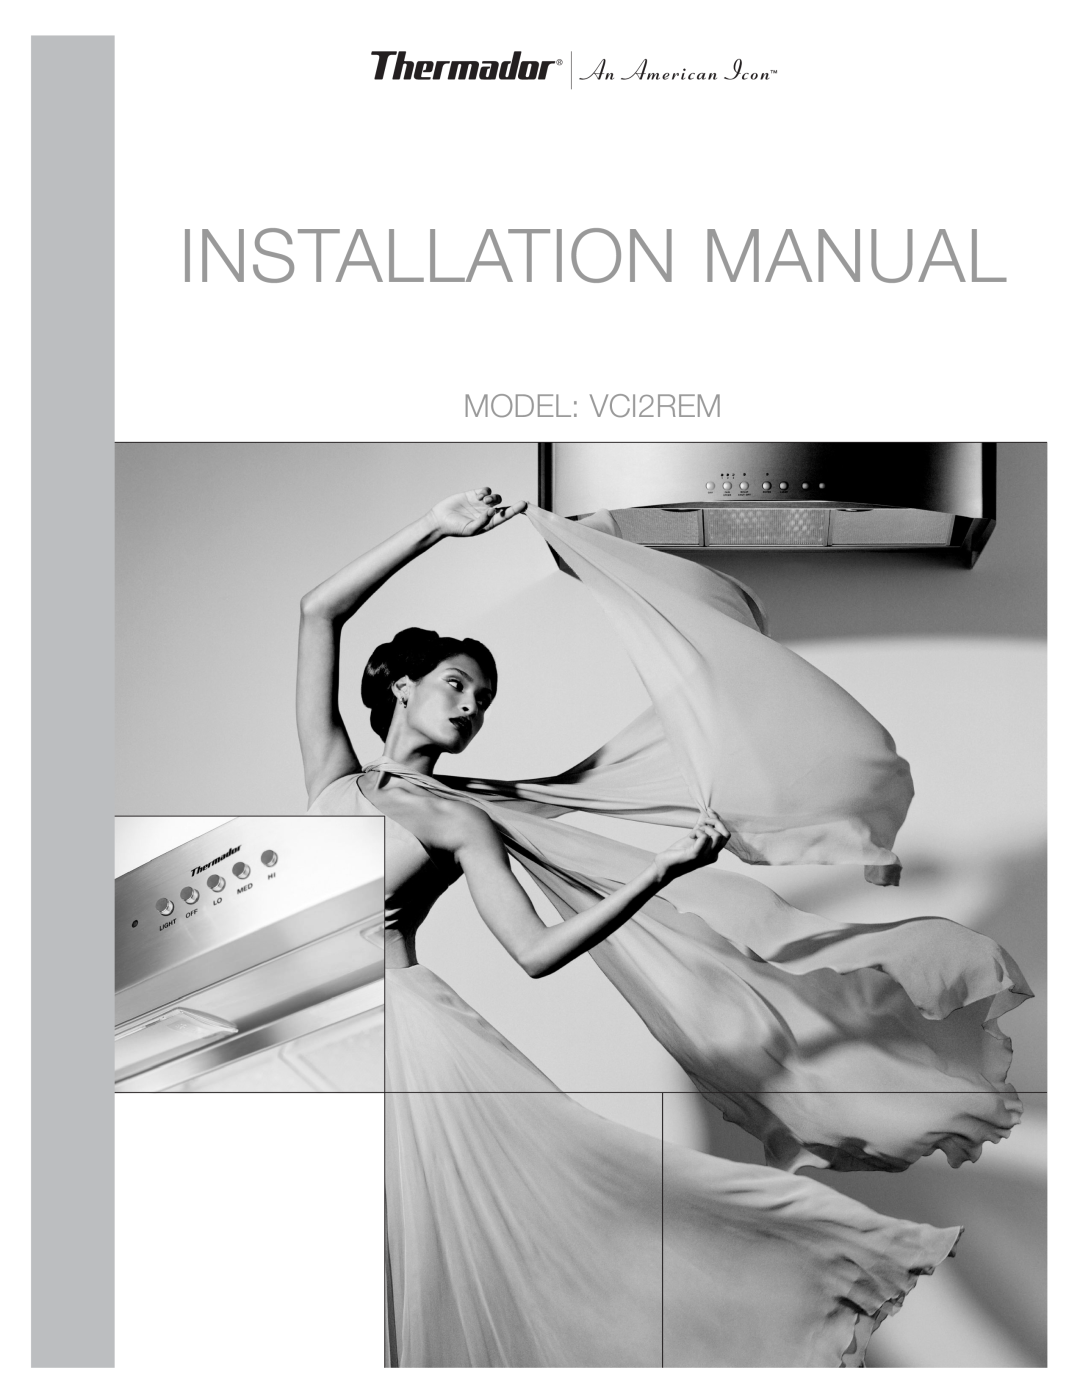 Thermador installation manual Ventil Ation, Installation Manual, MODEL E S VCI2REMVS2 